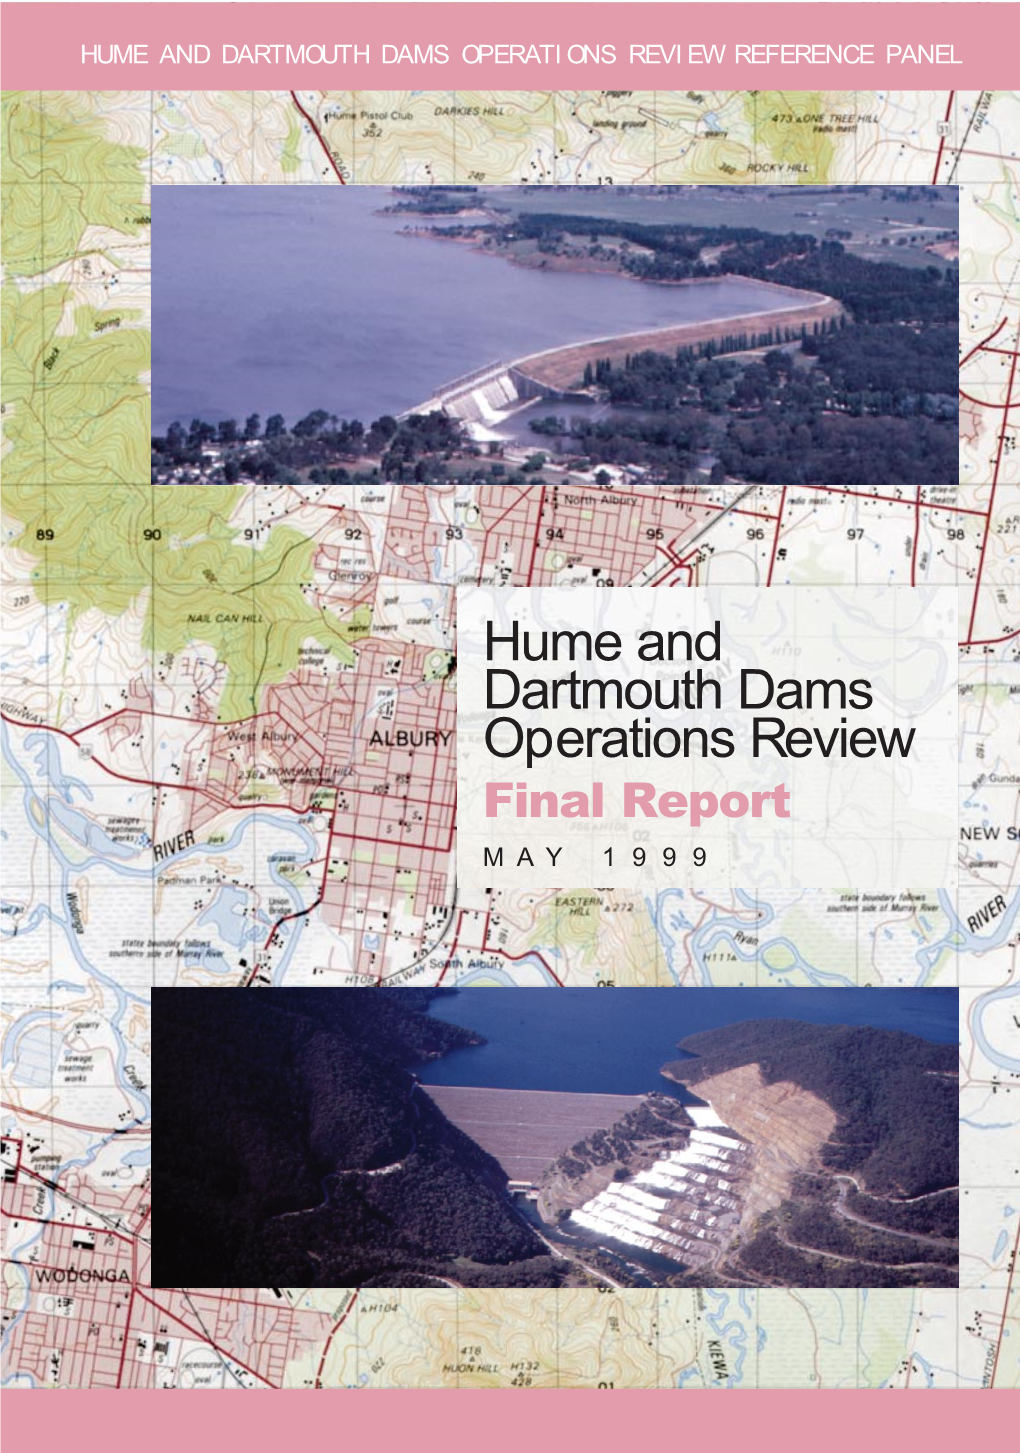 Hume Dartmouth Dams Operational Review Response May 1999